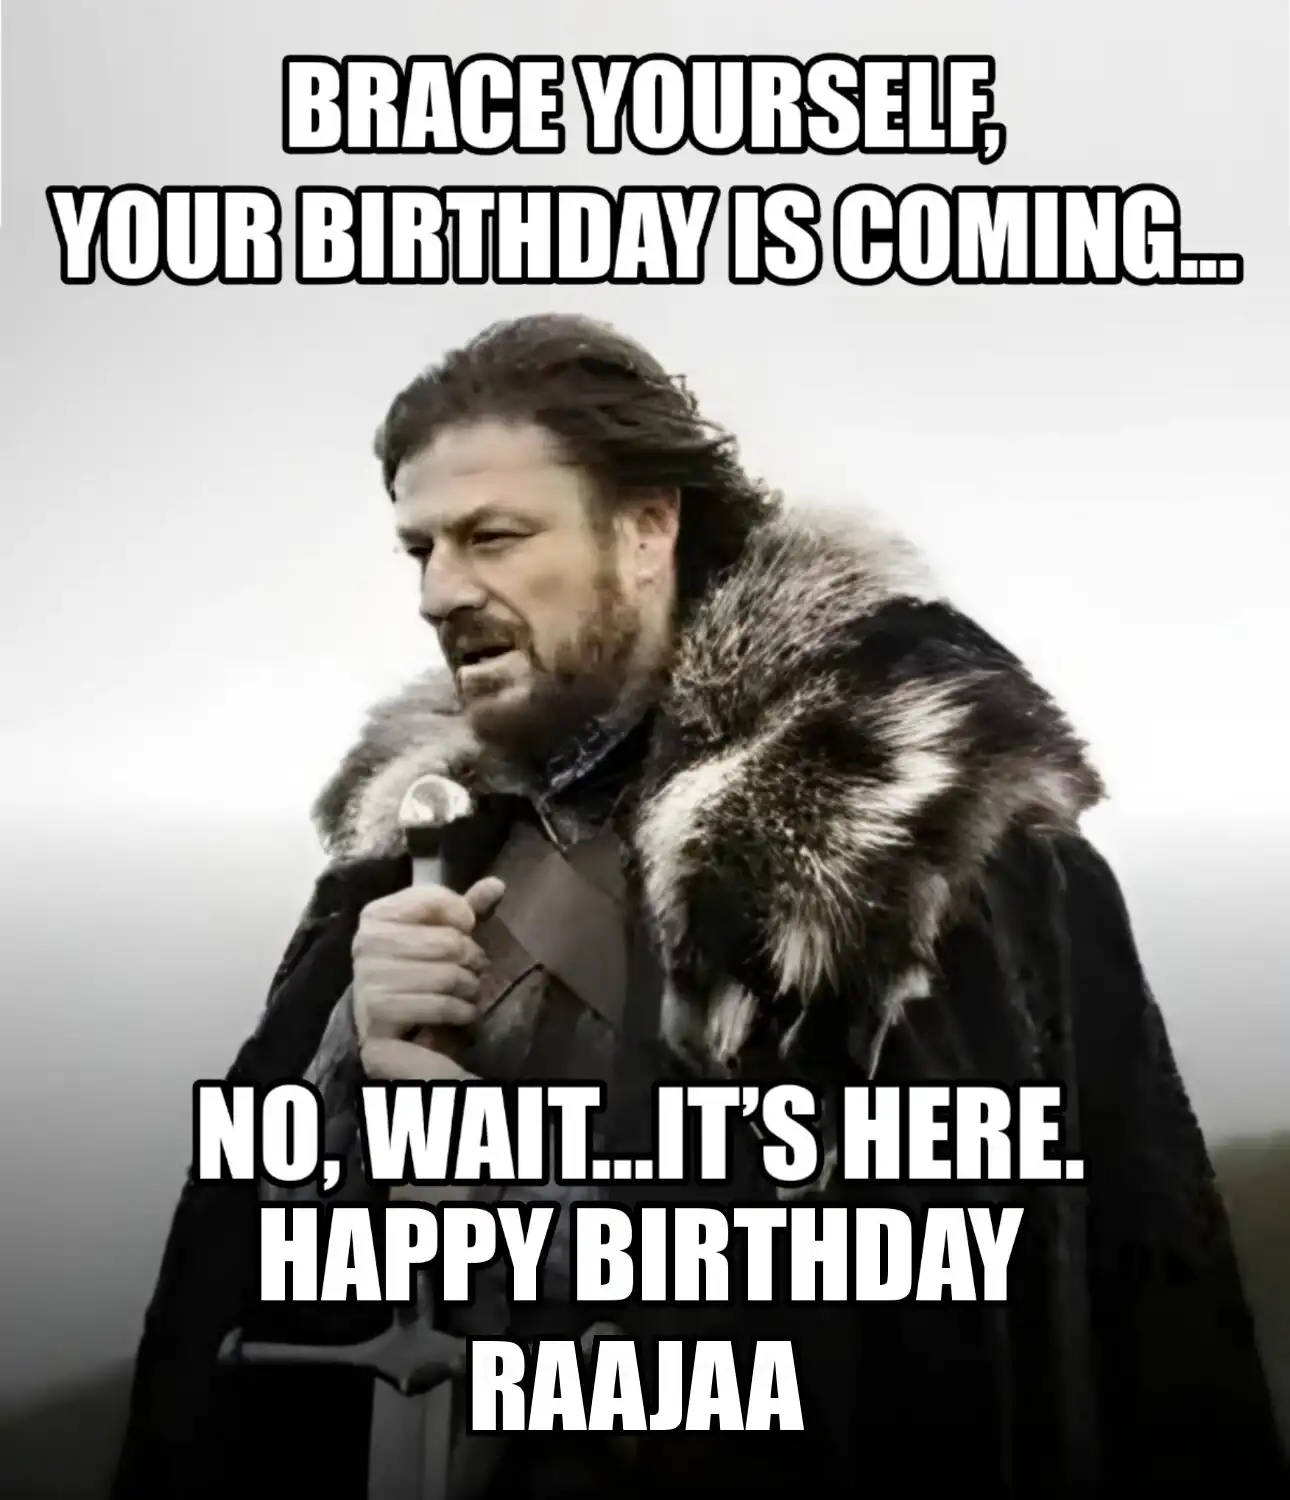 Happy Birthday Raajaa Brace Yourself Your Birthday Is Coming Meme